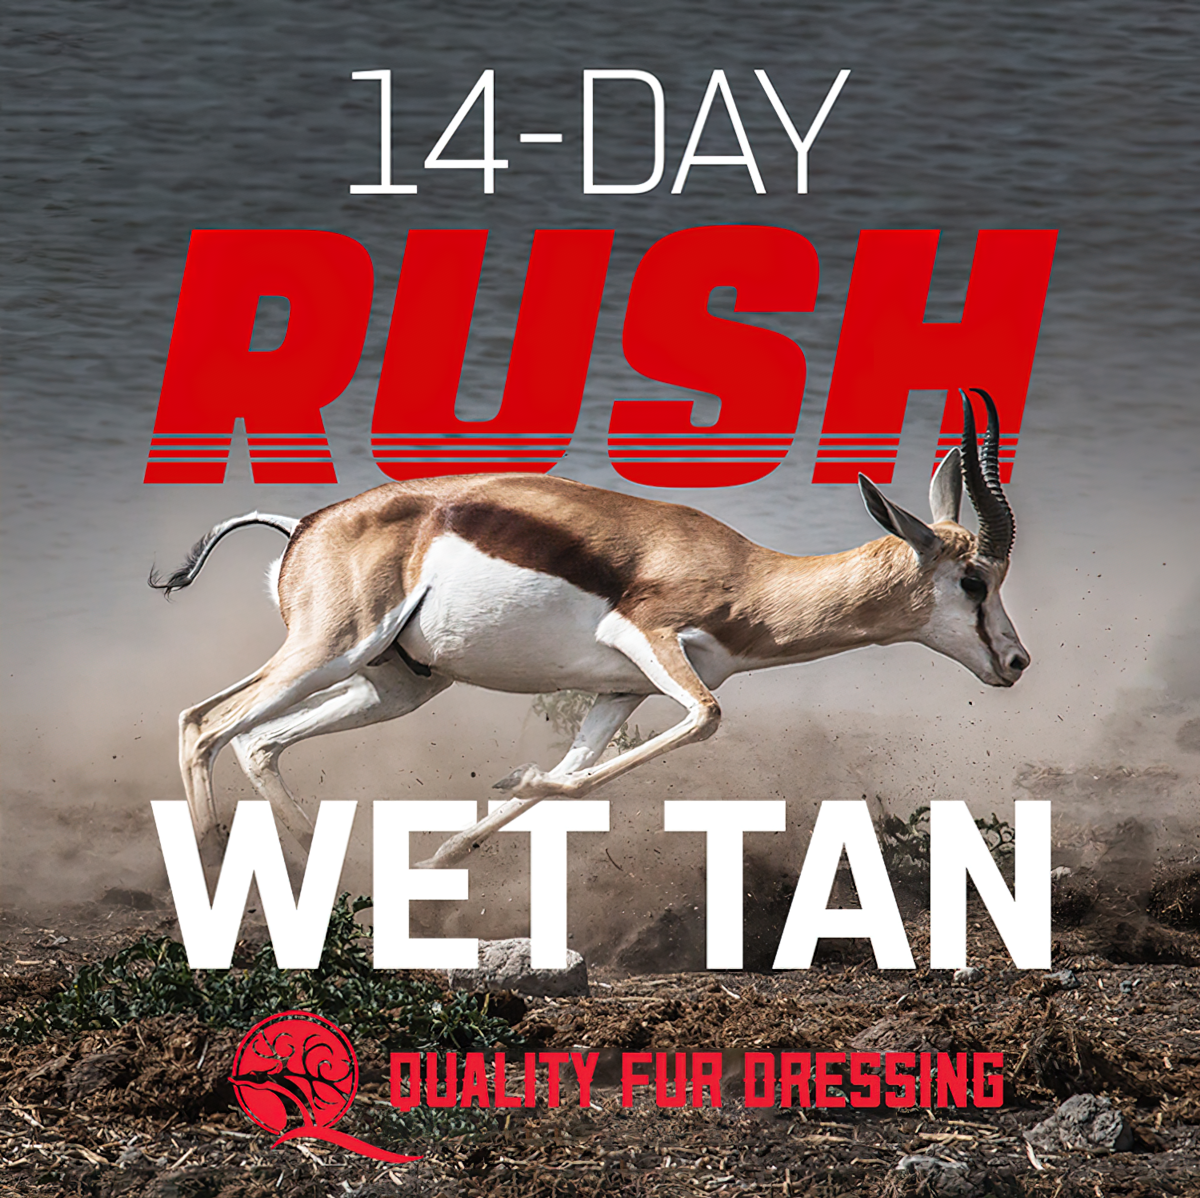 14 Day Rush Wet Tan - Quality Fur Dressing